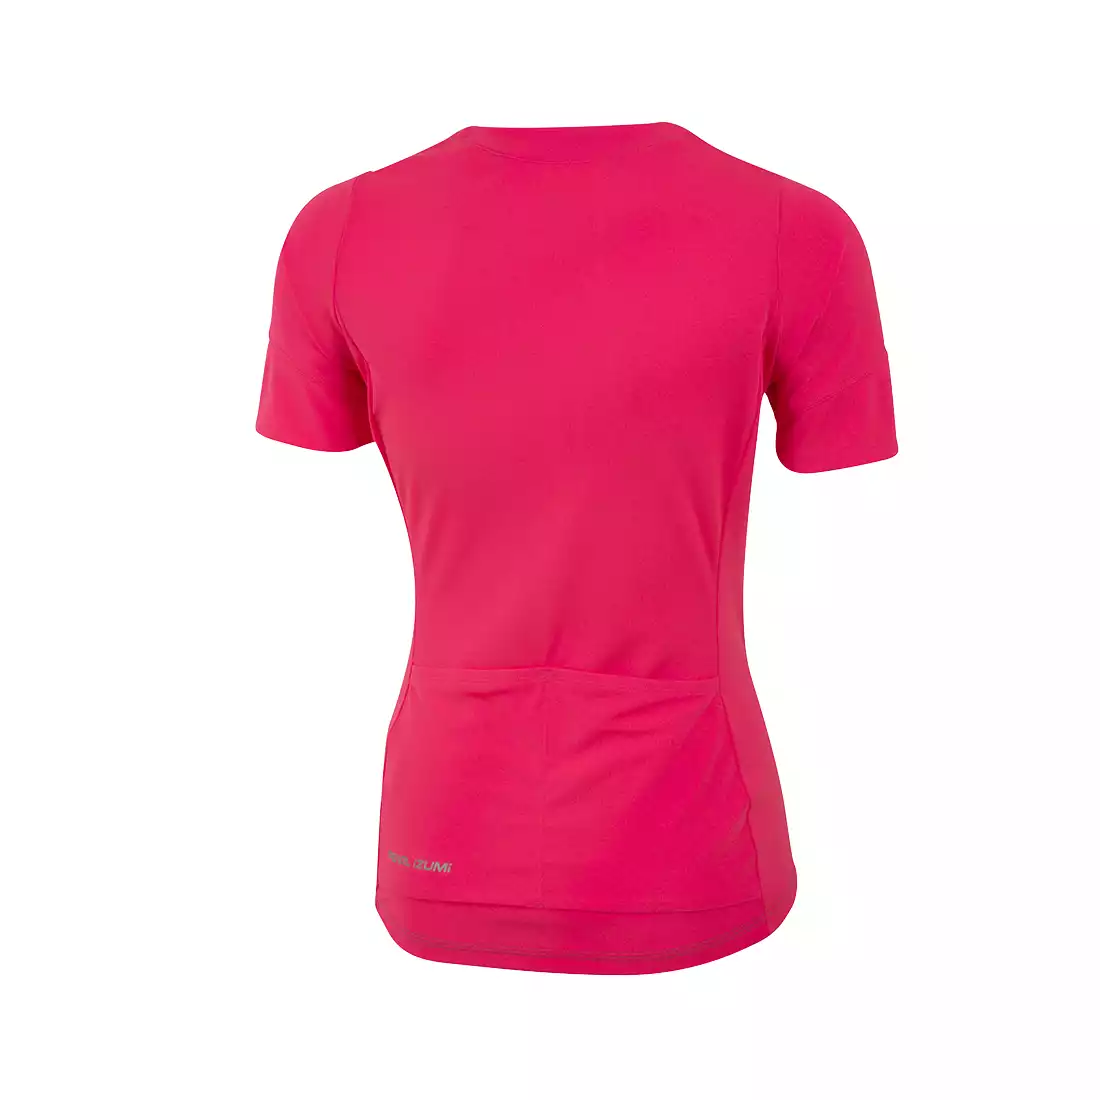 PEARL IZUMI damska koszulka rowerowa Select 11221703-5IW Screaming Pink Whirl 